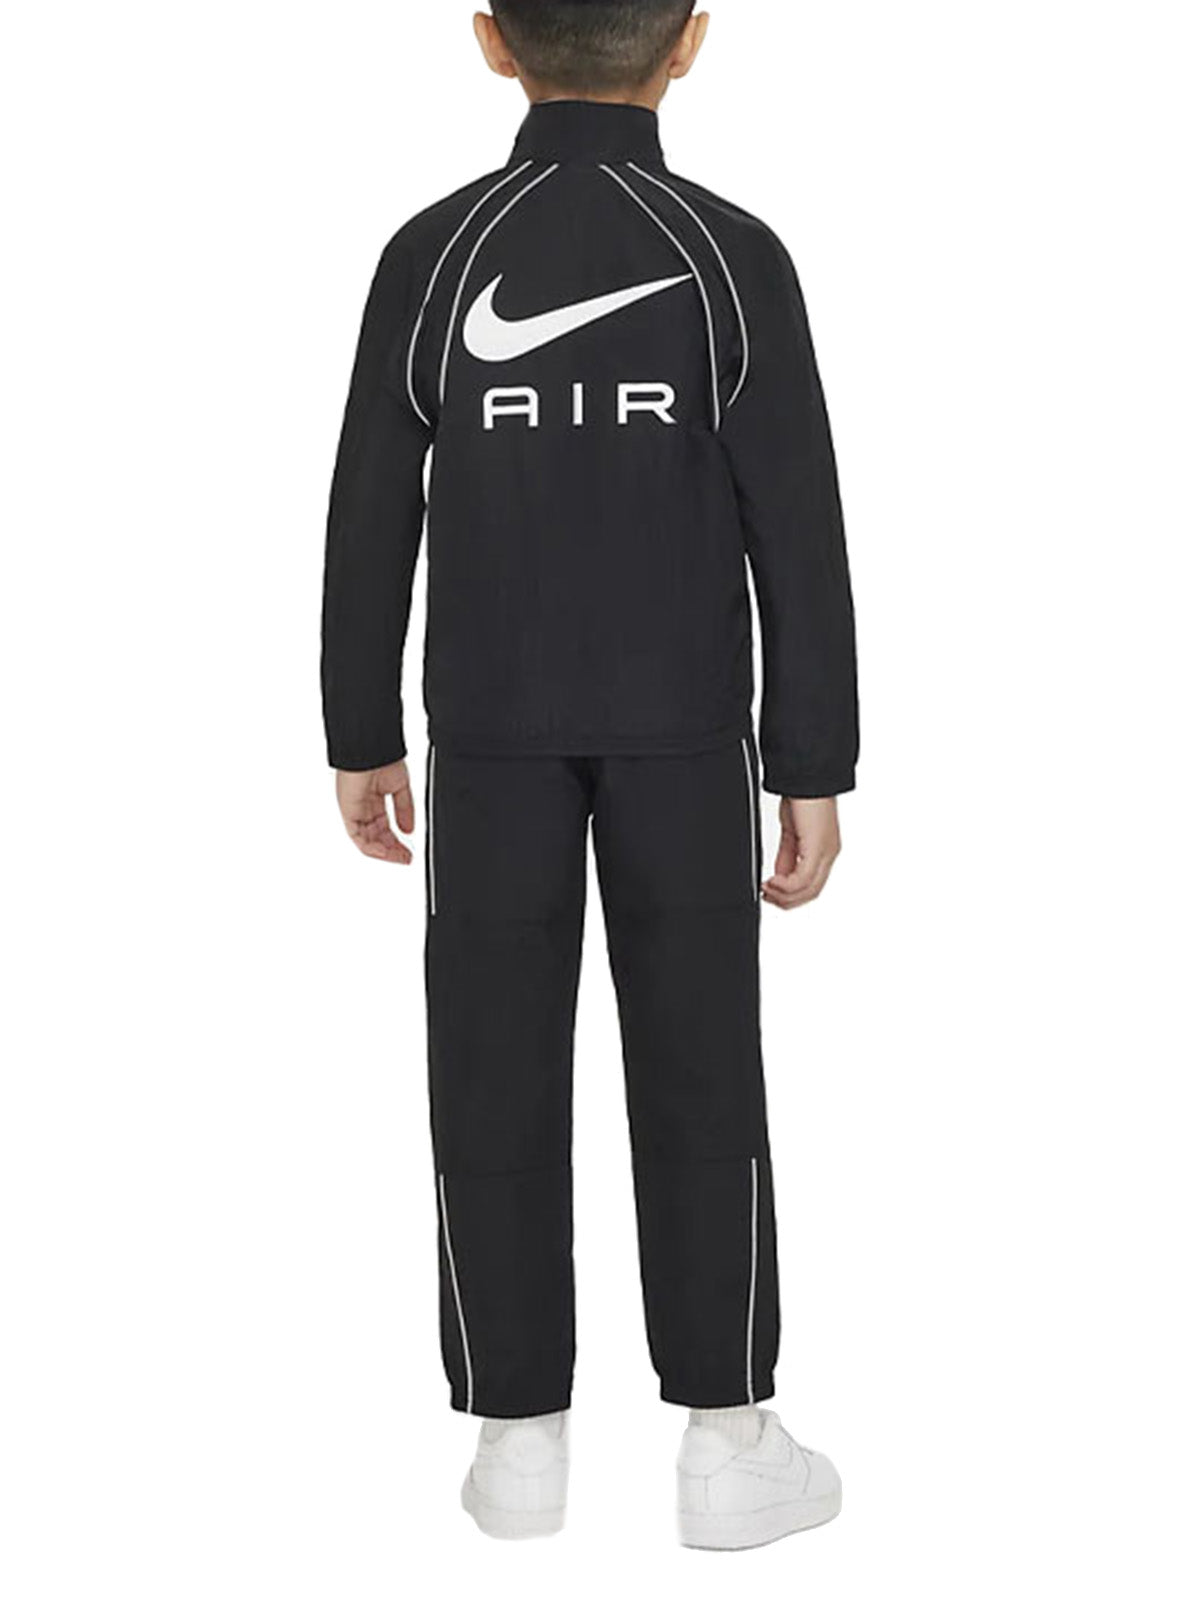 Tute a manica lunga Ragazzi Unisex Nike - Nike Sportswear Air Woven Warm Up Set - Nero